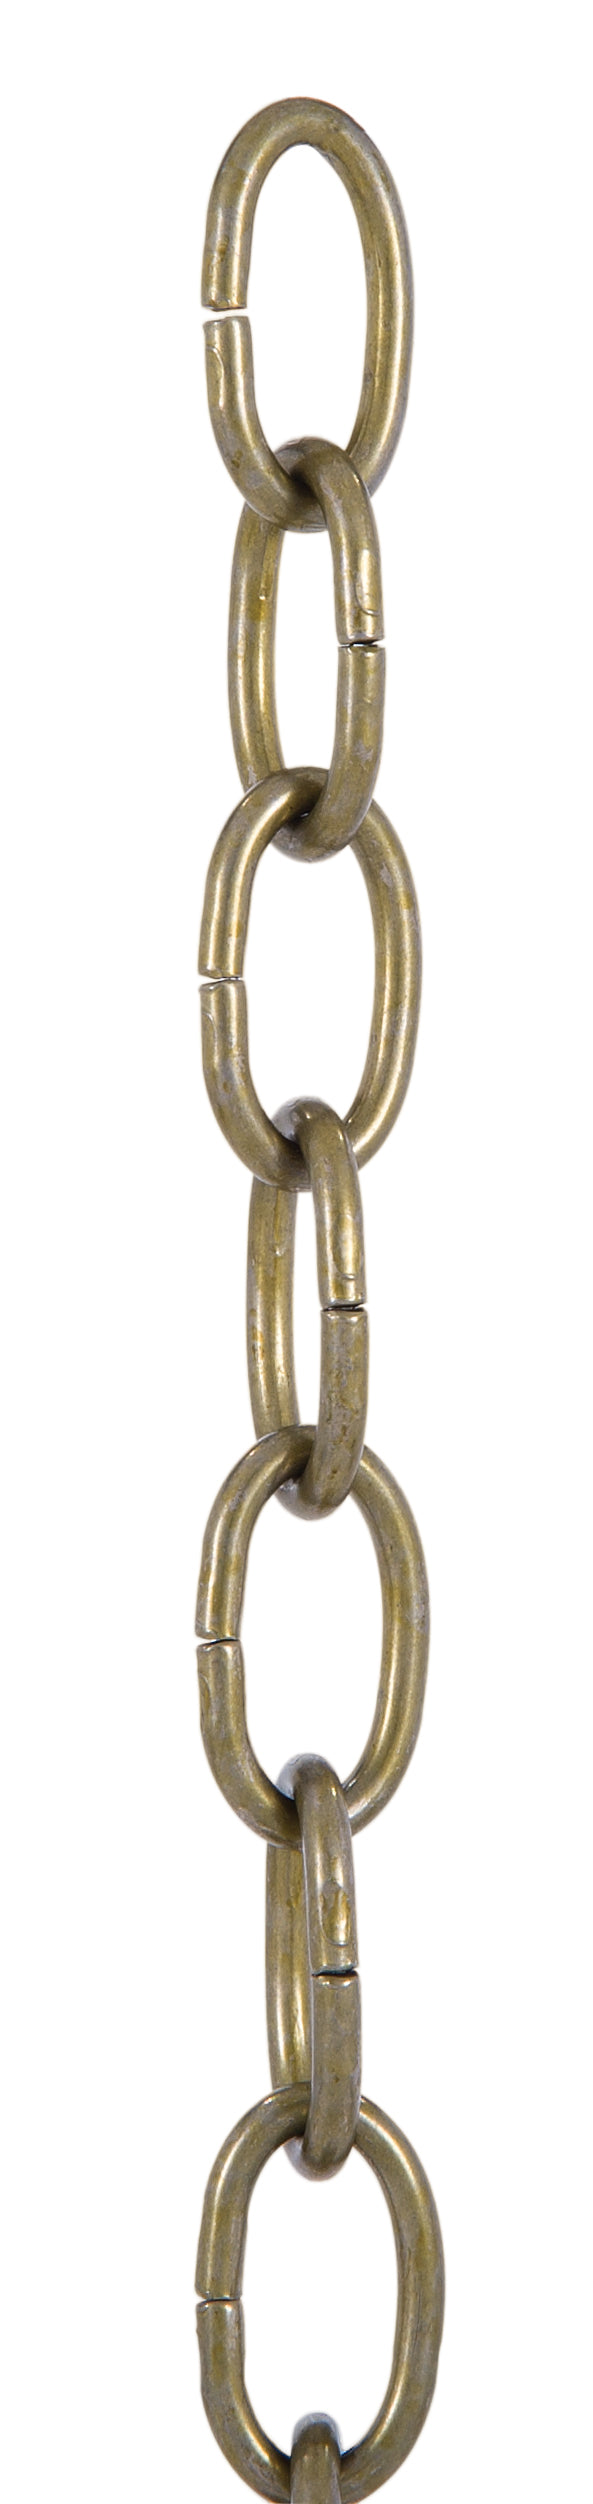 Antique Brass Finish, 5 Gauge Oval Steel Chain